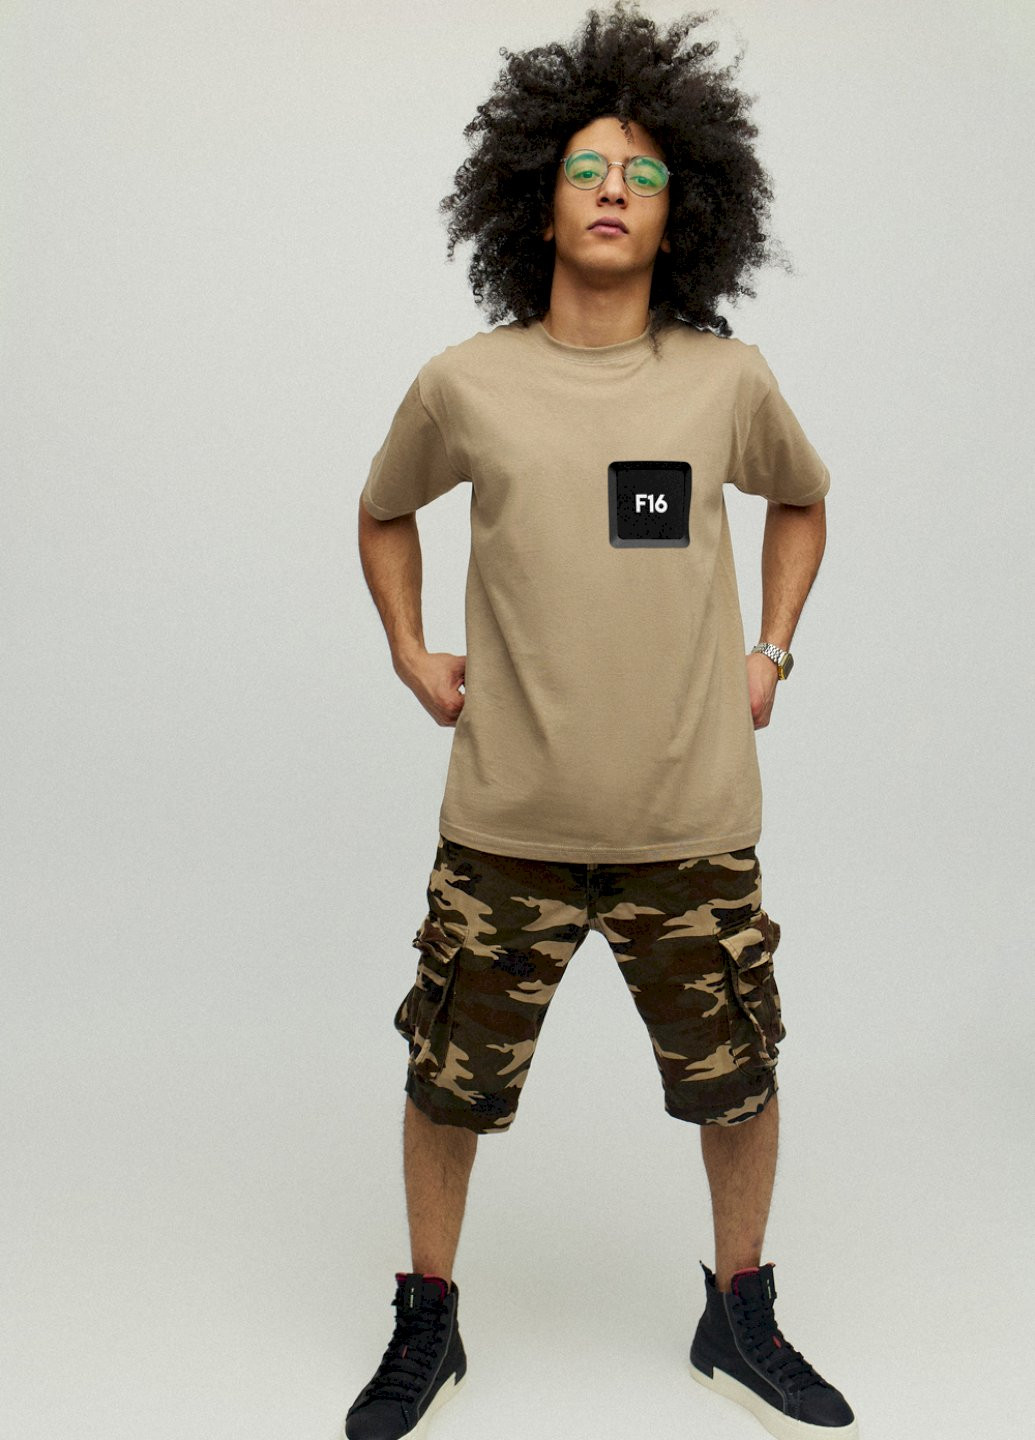 Хаки (оливковая) футболка мужская хаки "f16" YAPPI